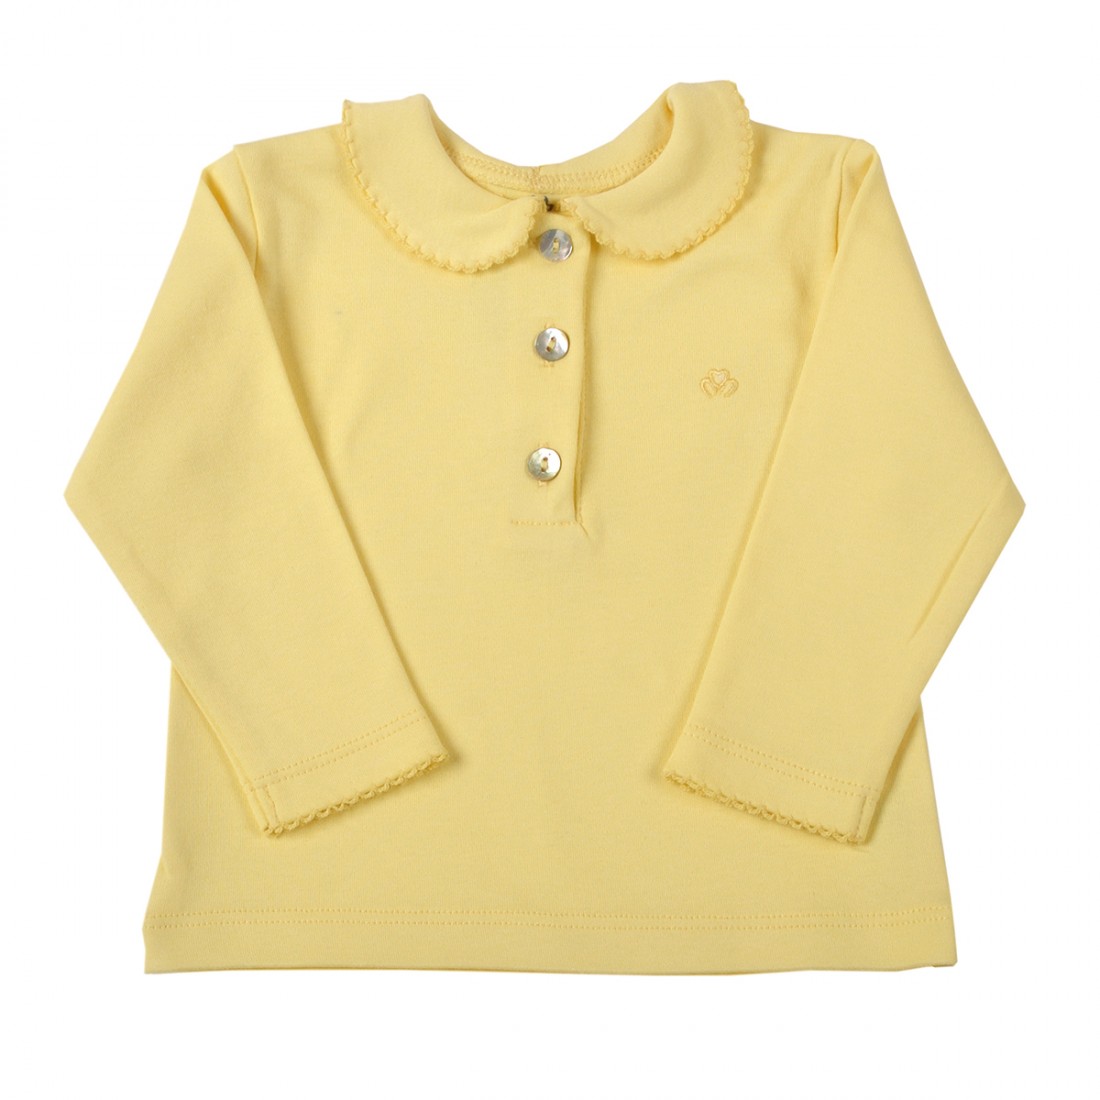 OrganicEra Organic Boy's Shirt, Yellow